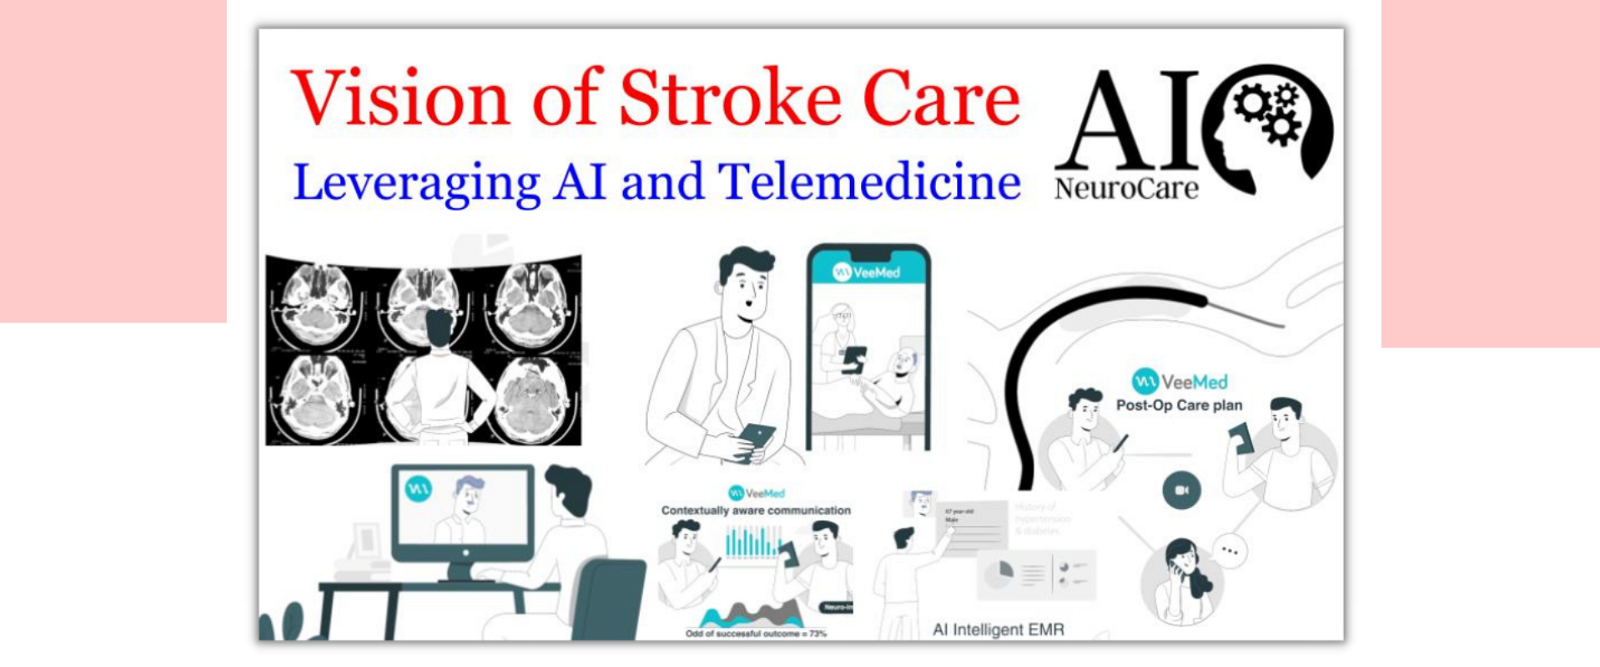 Vision of Stroke Care - Leveraging Artificial Intelligence & Telemedicine